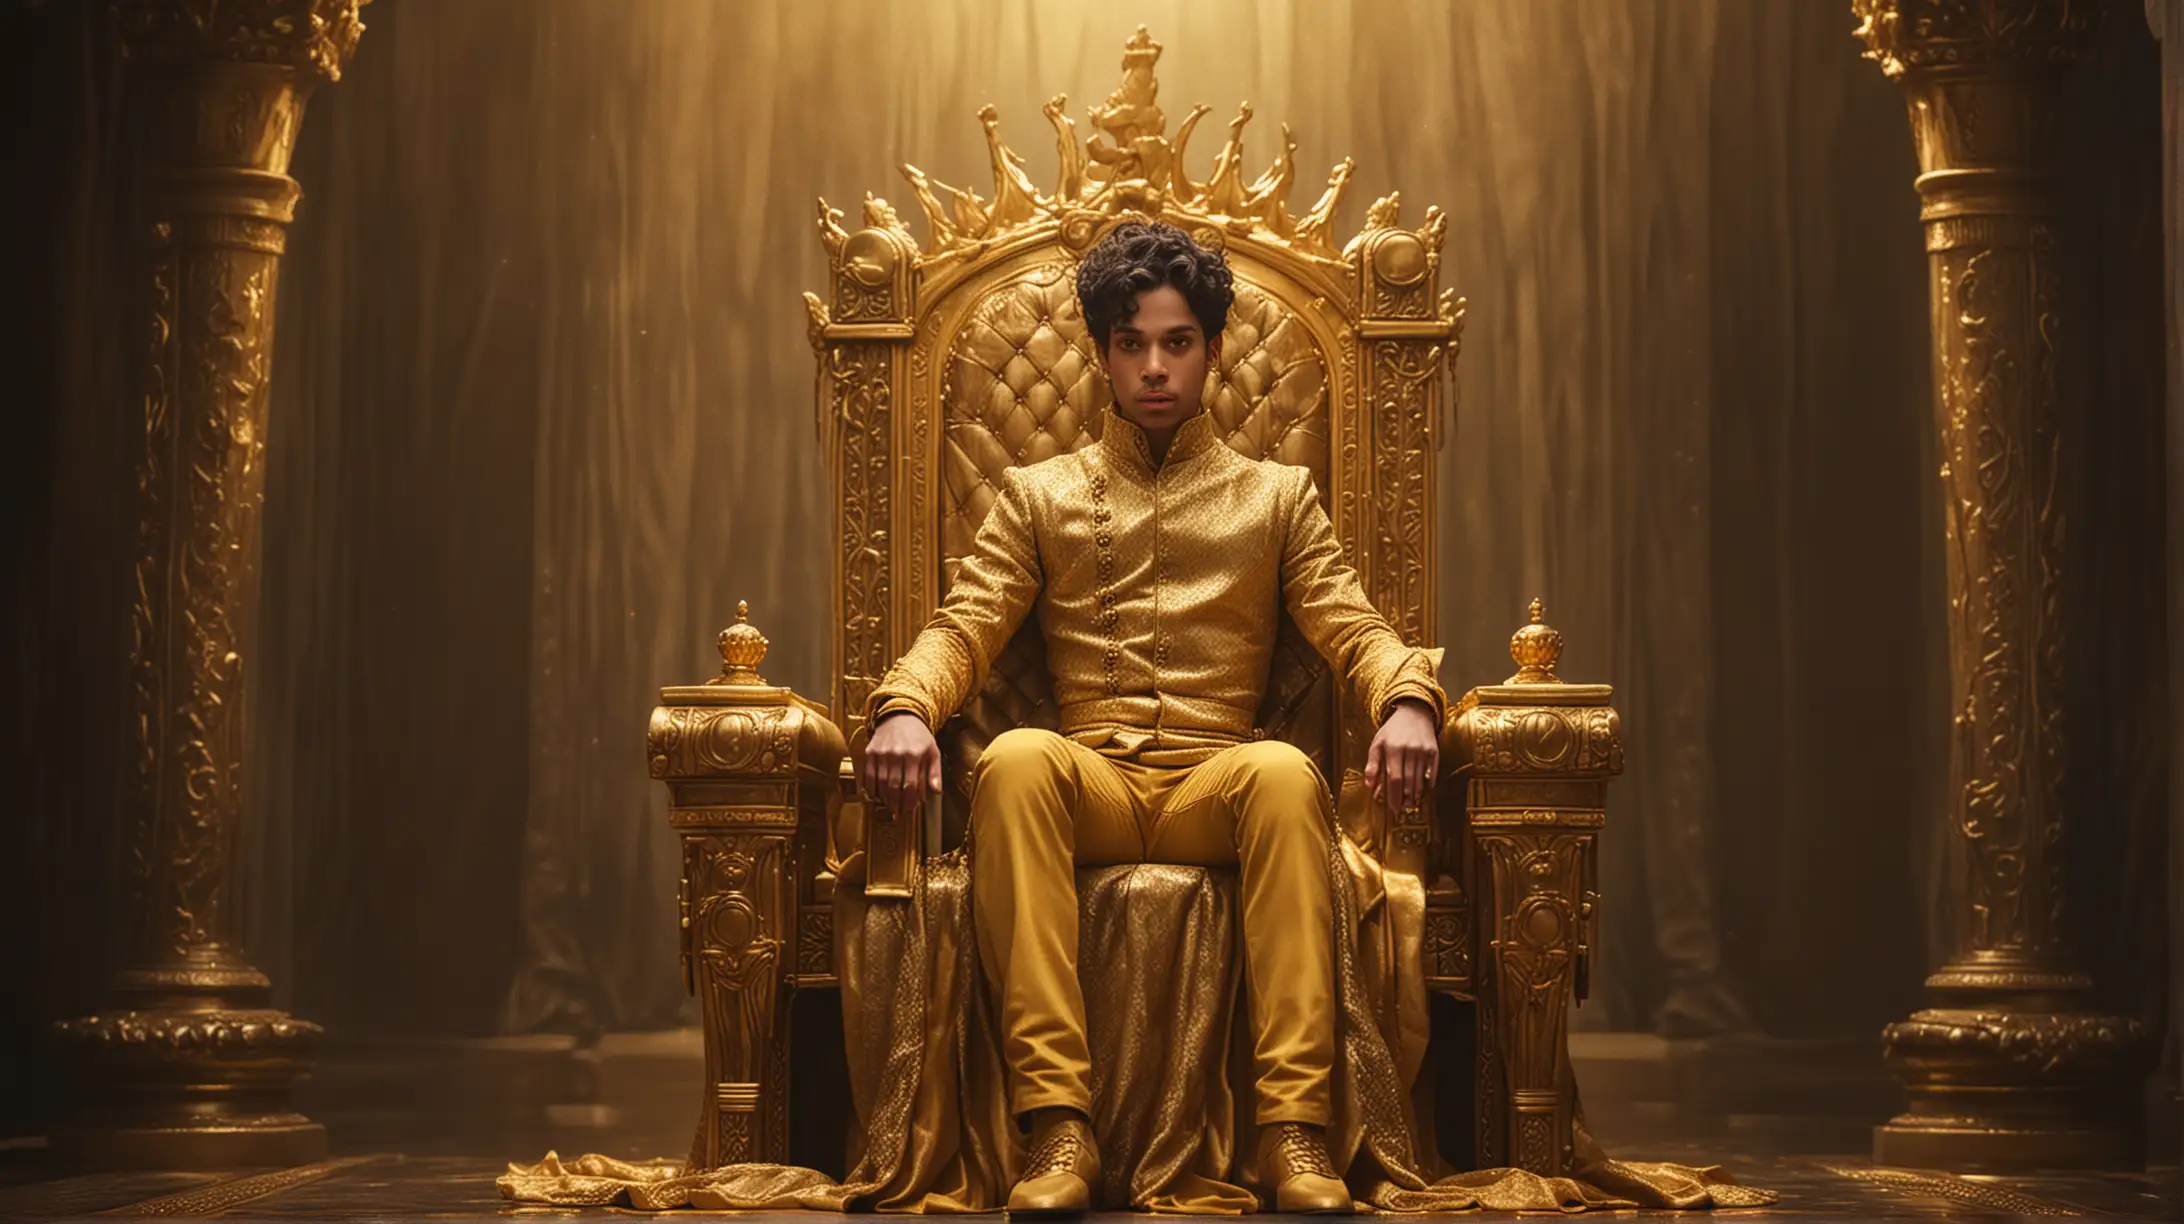 Prince Sitting on golden Throne